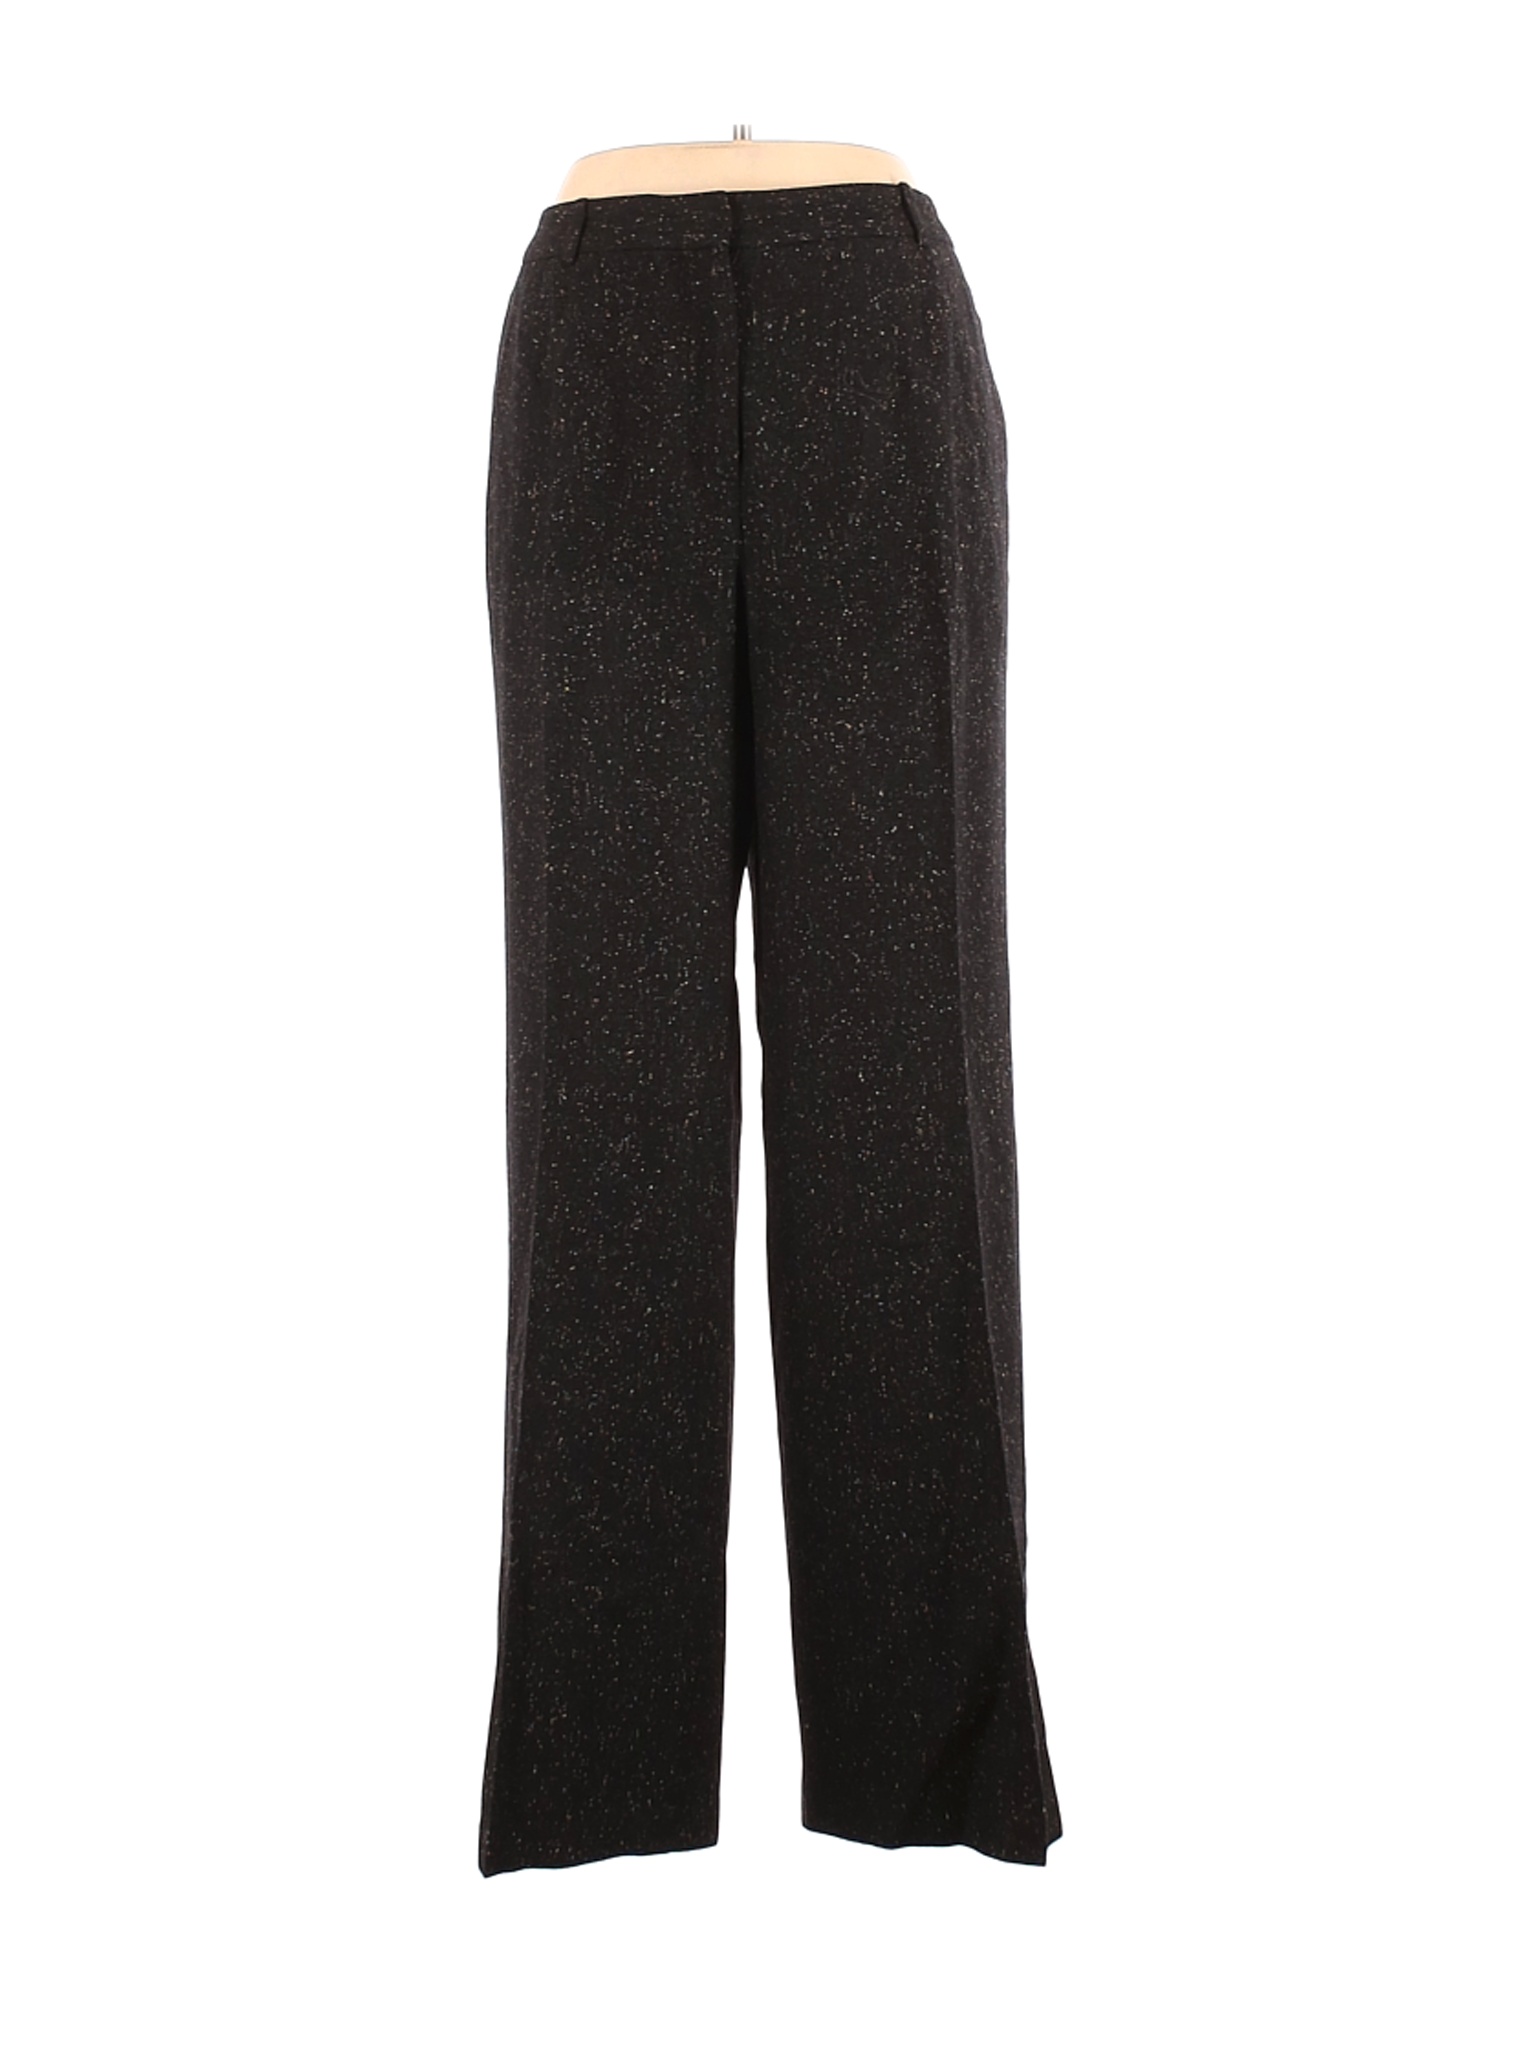 Jones New York Women Black Wool Pants 14 | eBay